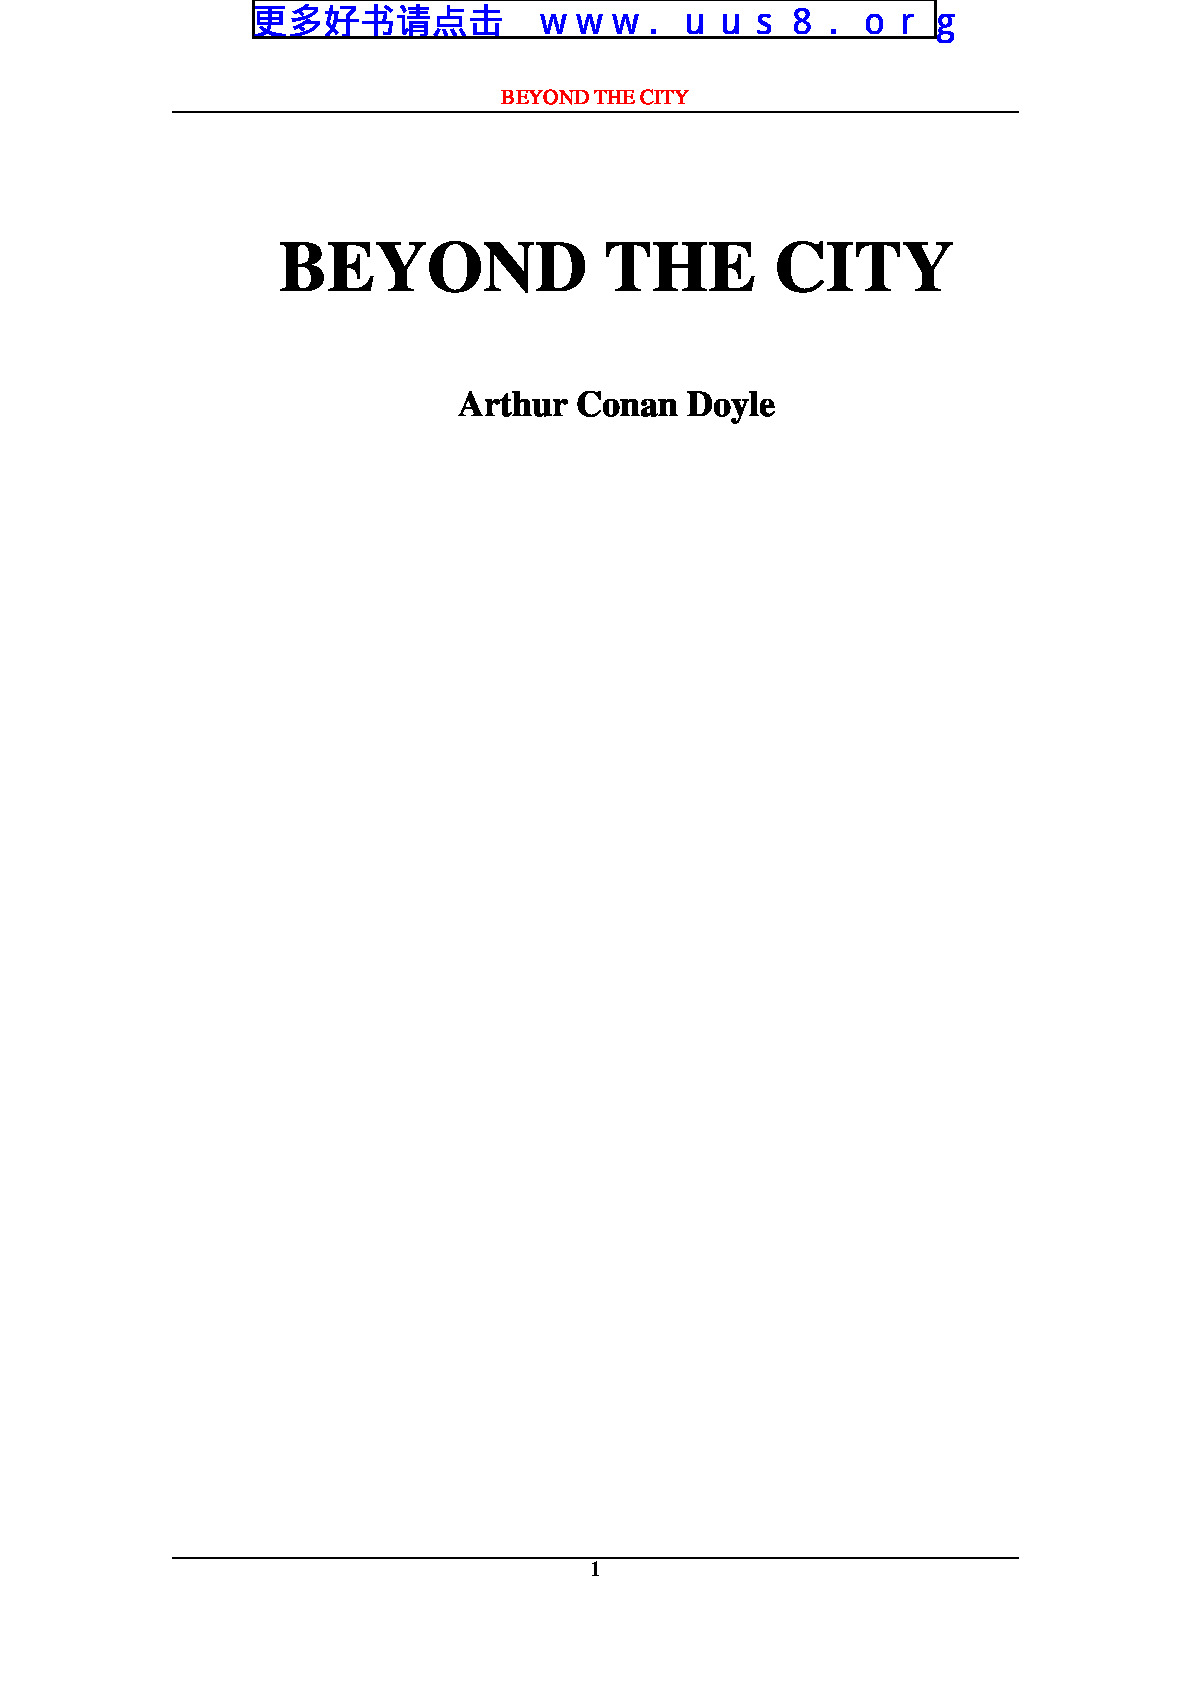 beyond_the_city(城市之上)